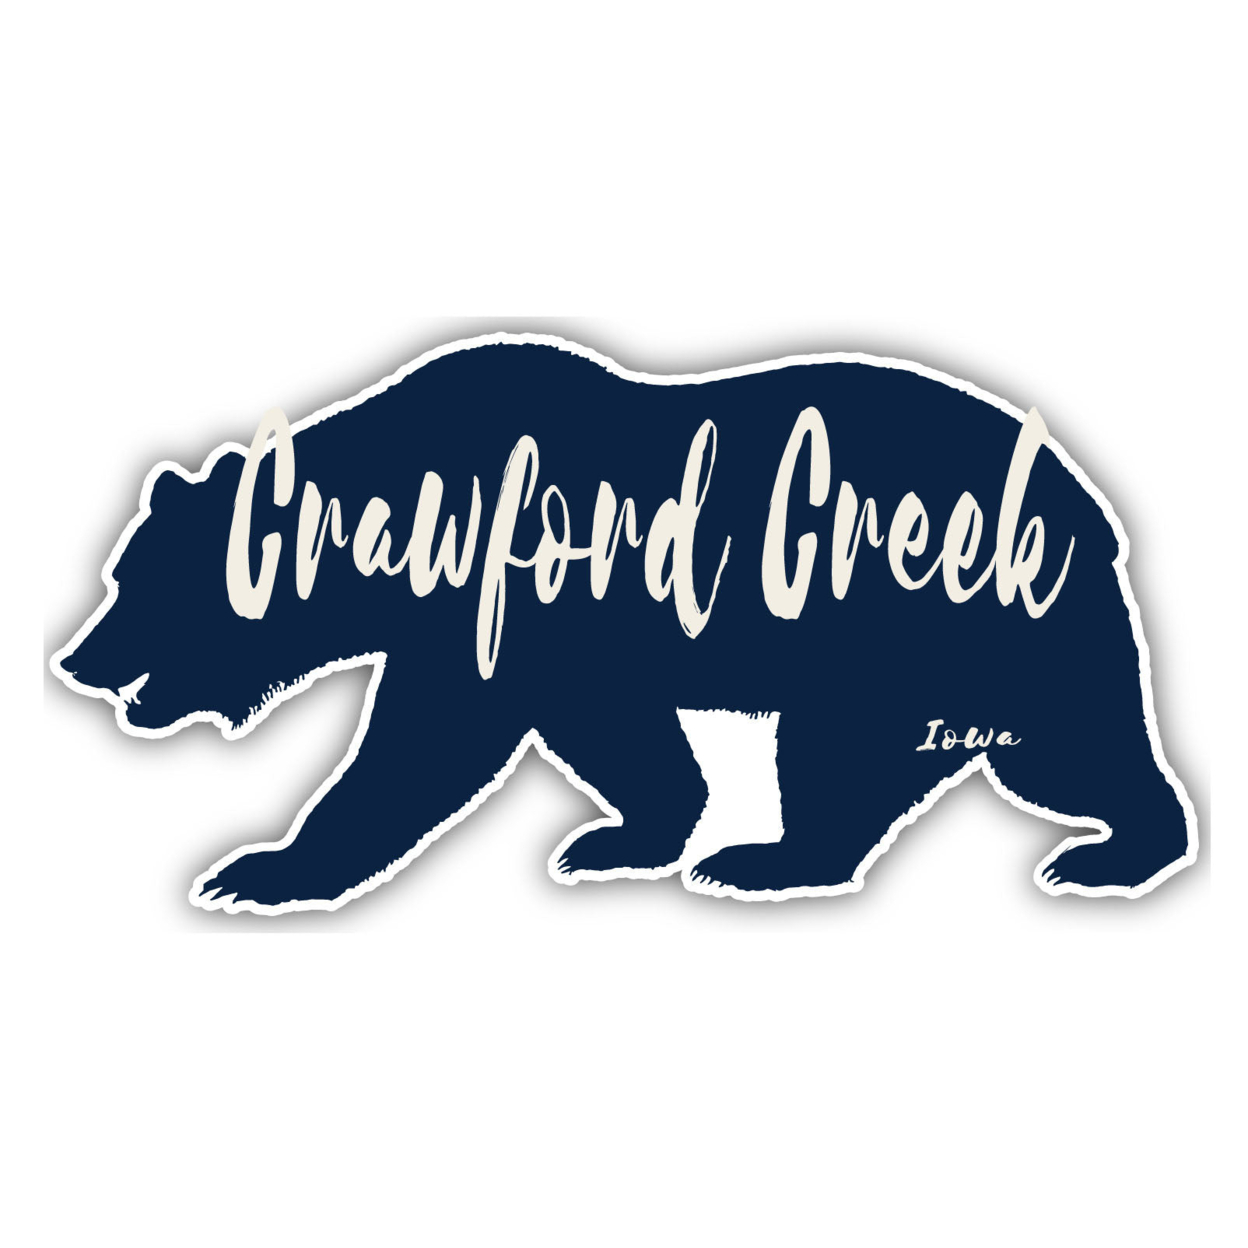 Crawford Creek Iowa Souvenir Decorative Stickers (Choose Theme And Size) - Single Unit, 2-Inch, Bear